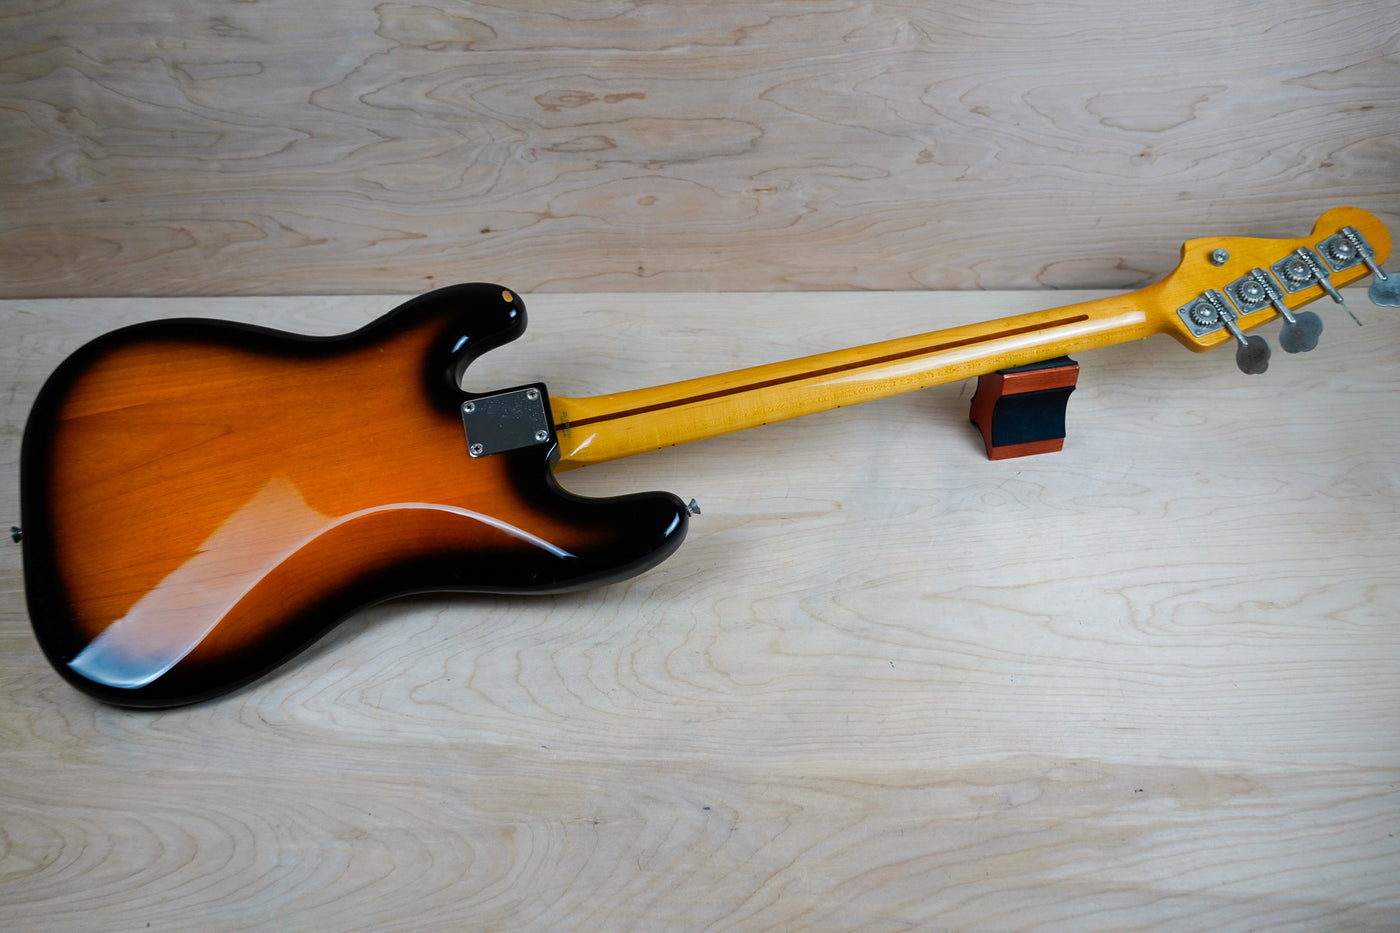 Fender PB-57 Precision Bass Reissue CIJ 2004 Sunburst Crafted in Japan w/ Bag